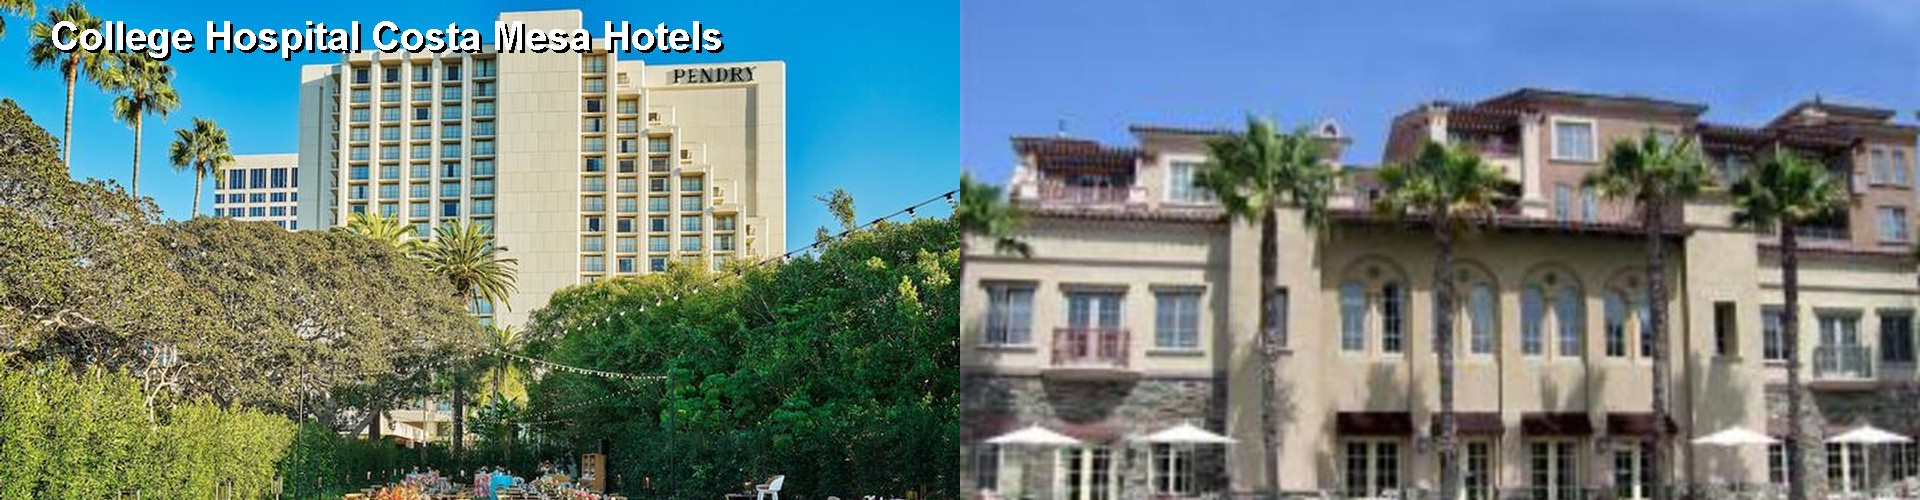 4 Best Hotels near College Hospital Costa Mesa